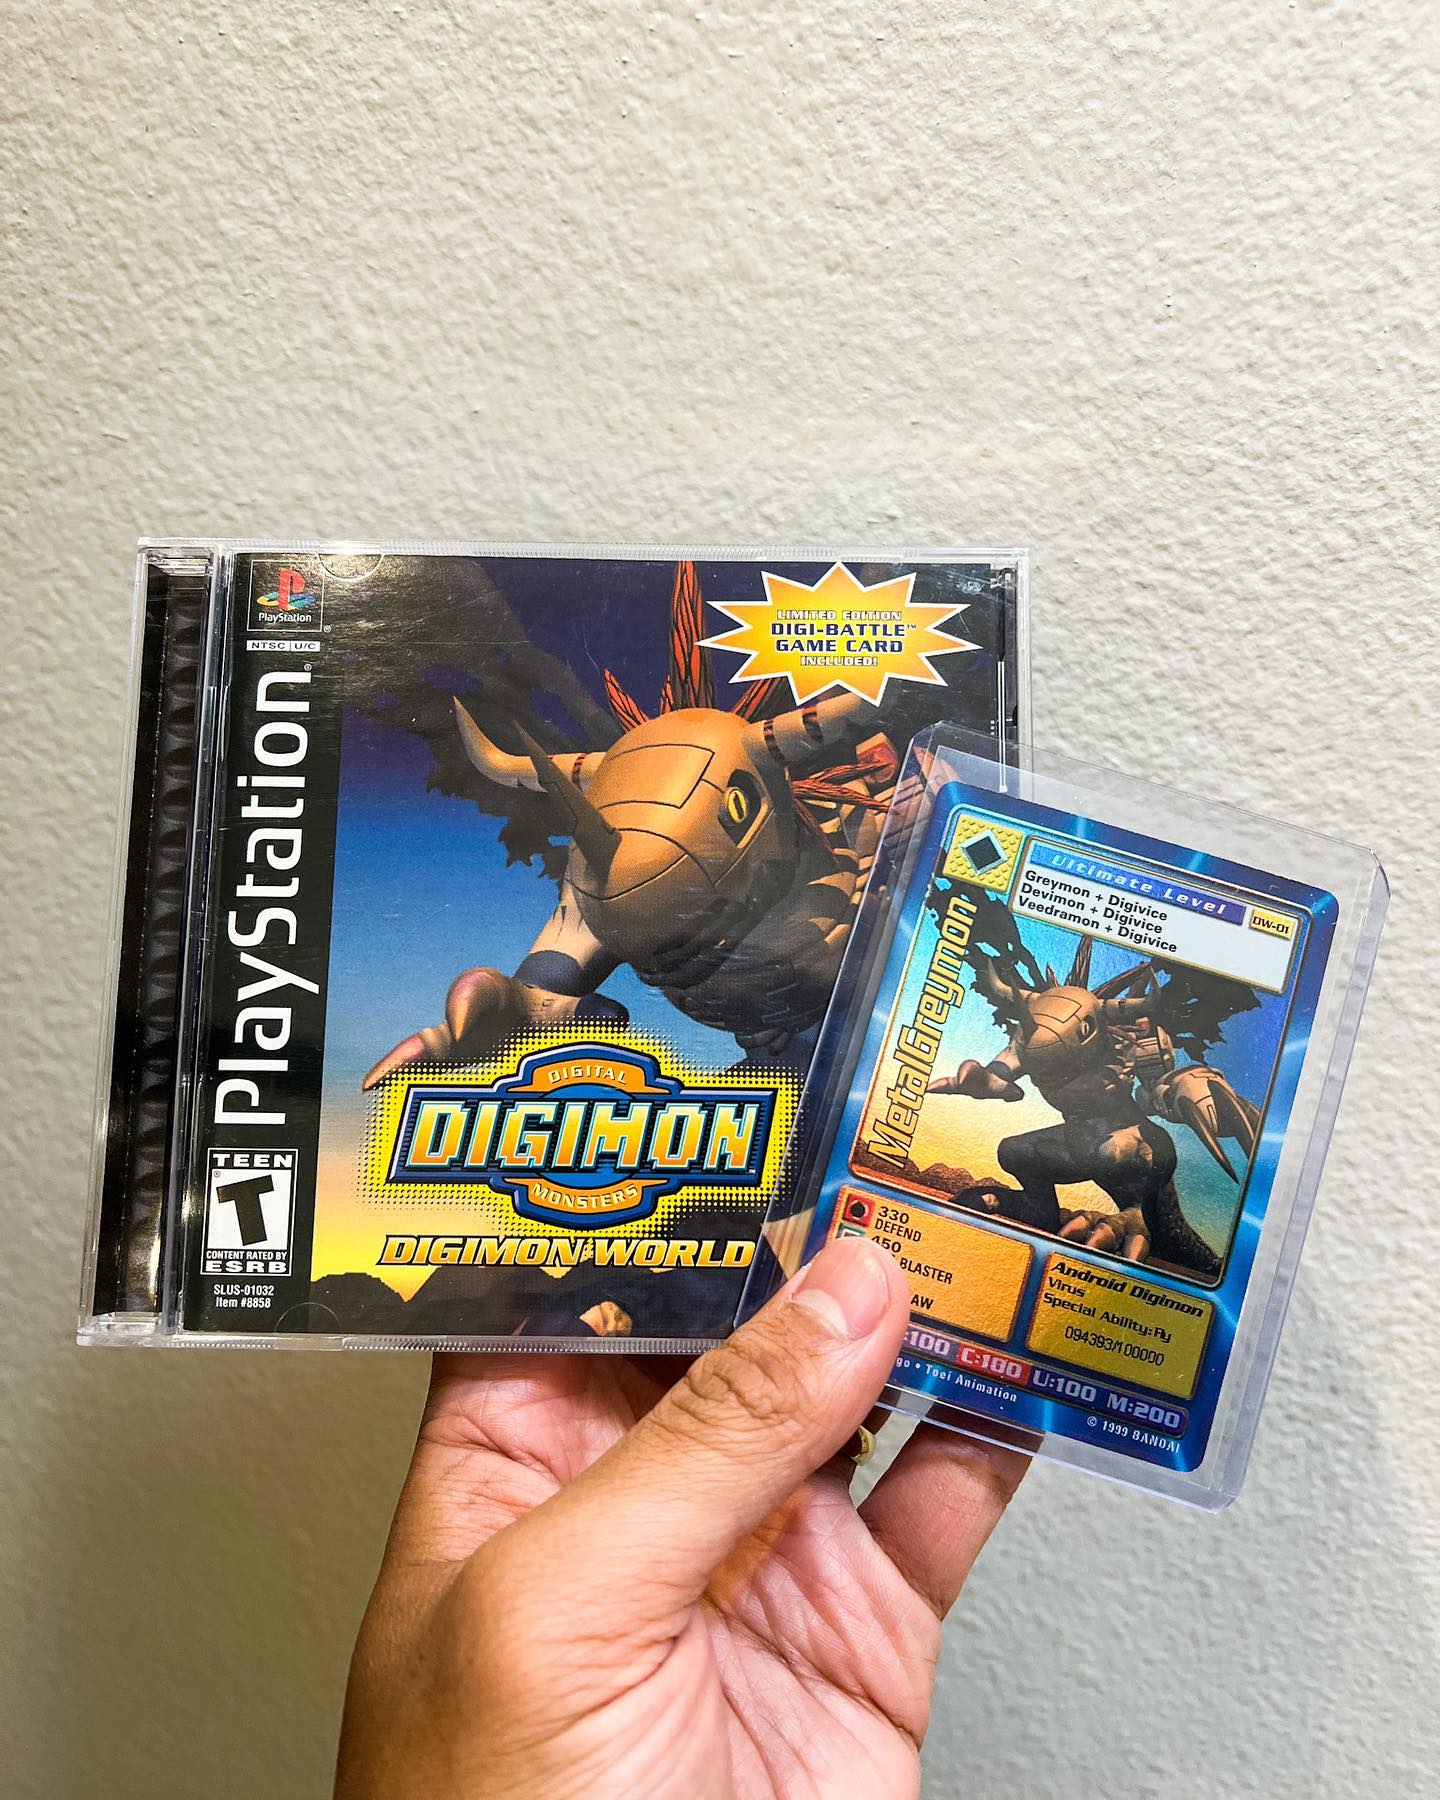 Digimon World PlayStation Promo DW-01 MetalGreymon - number 094393 / 100,000